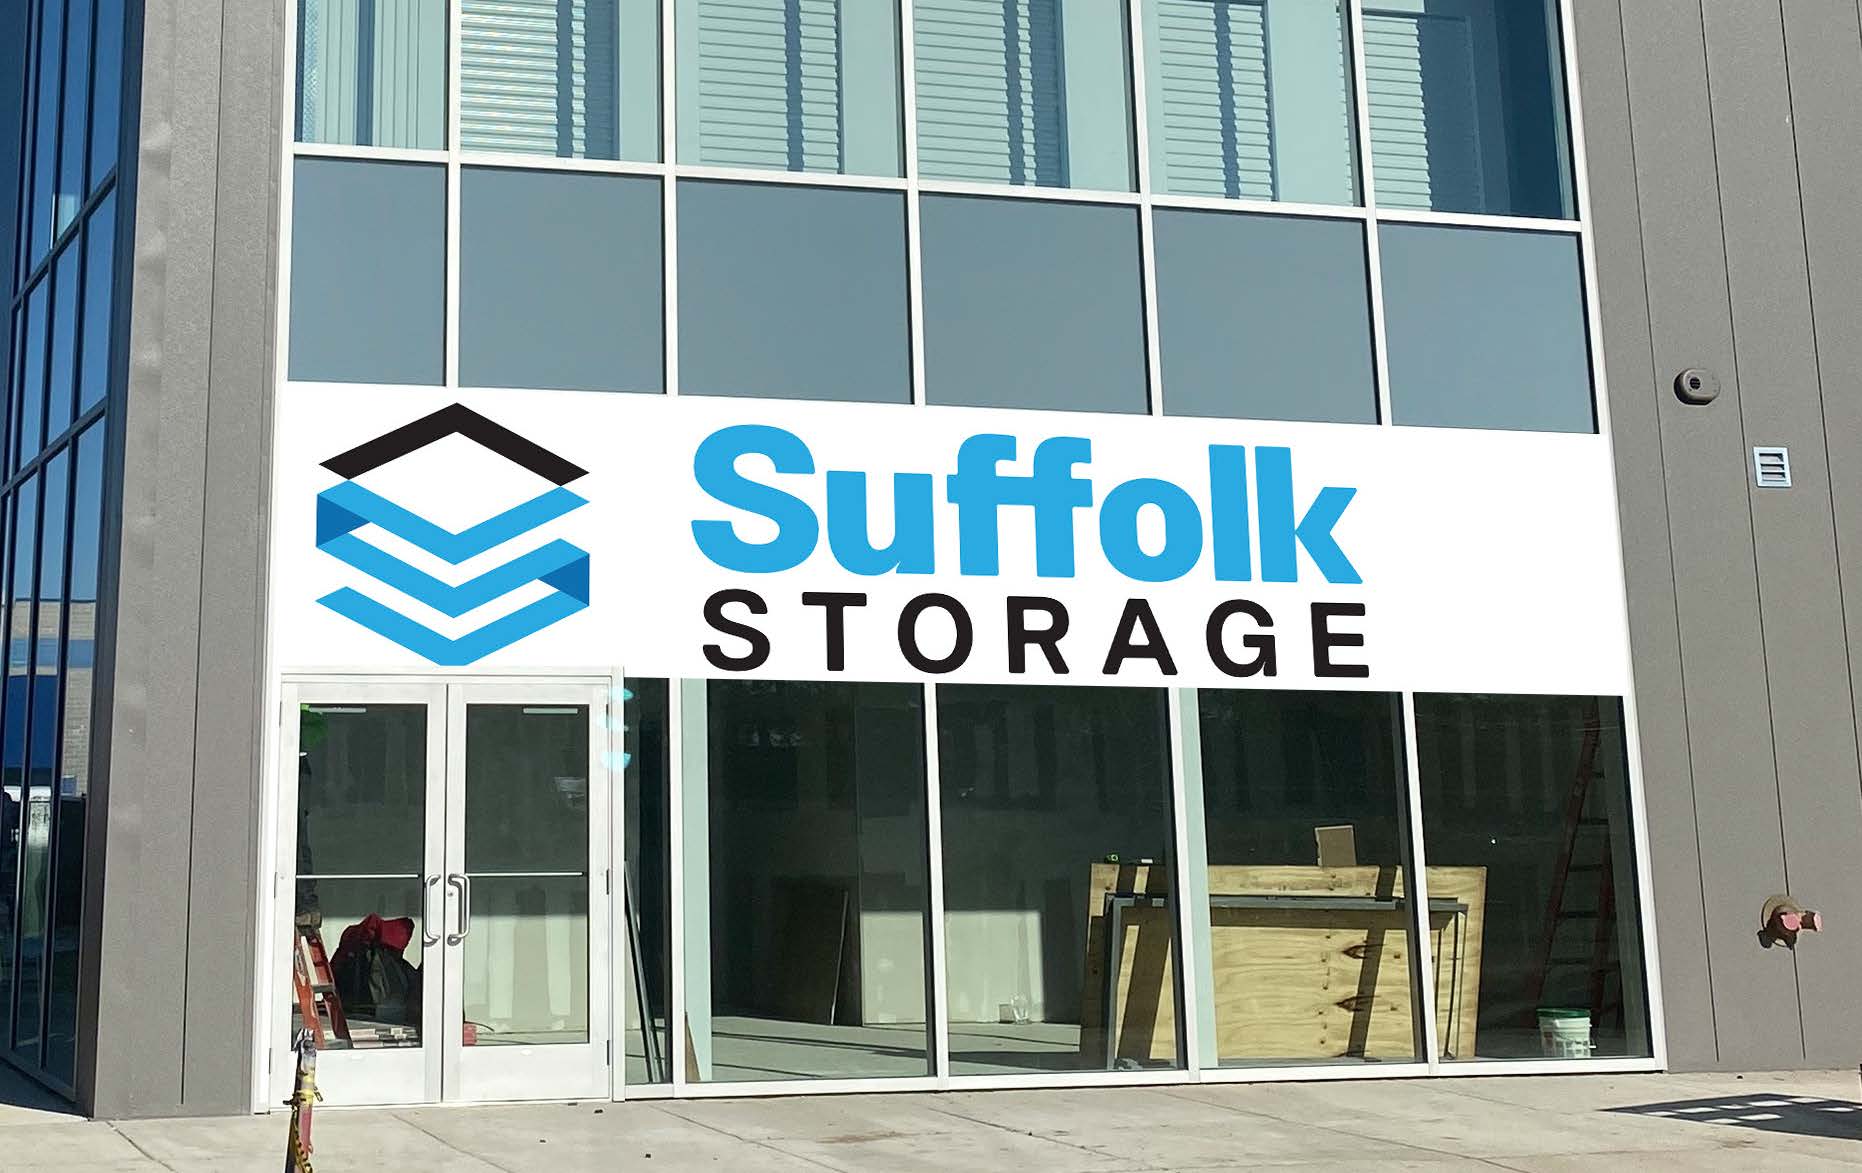  units in Bohemia, NY for Suffolk Storage